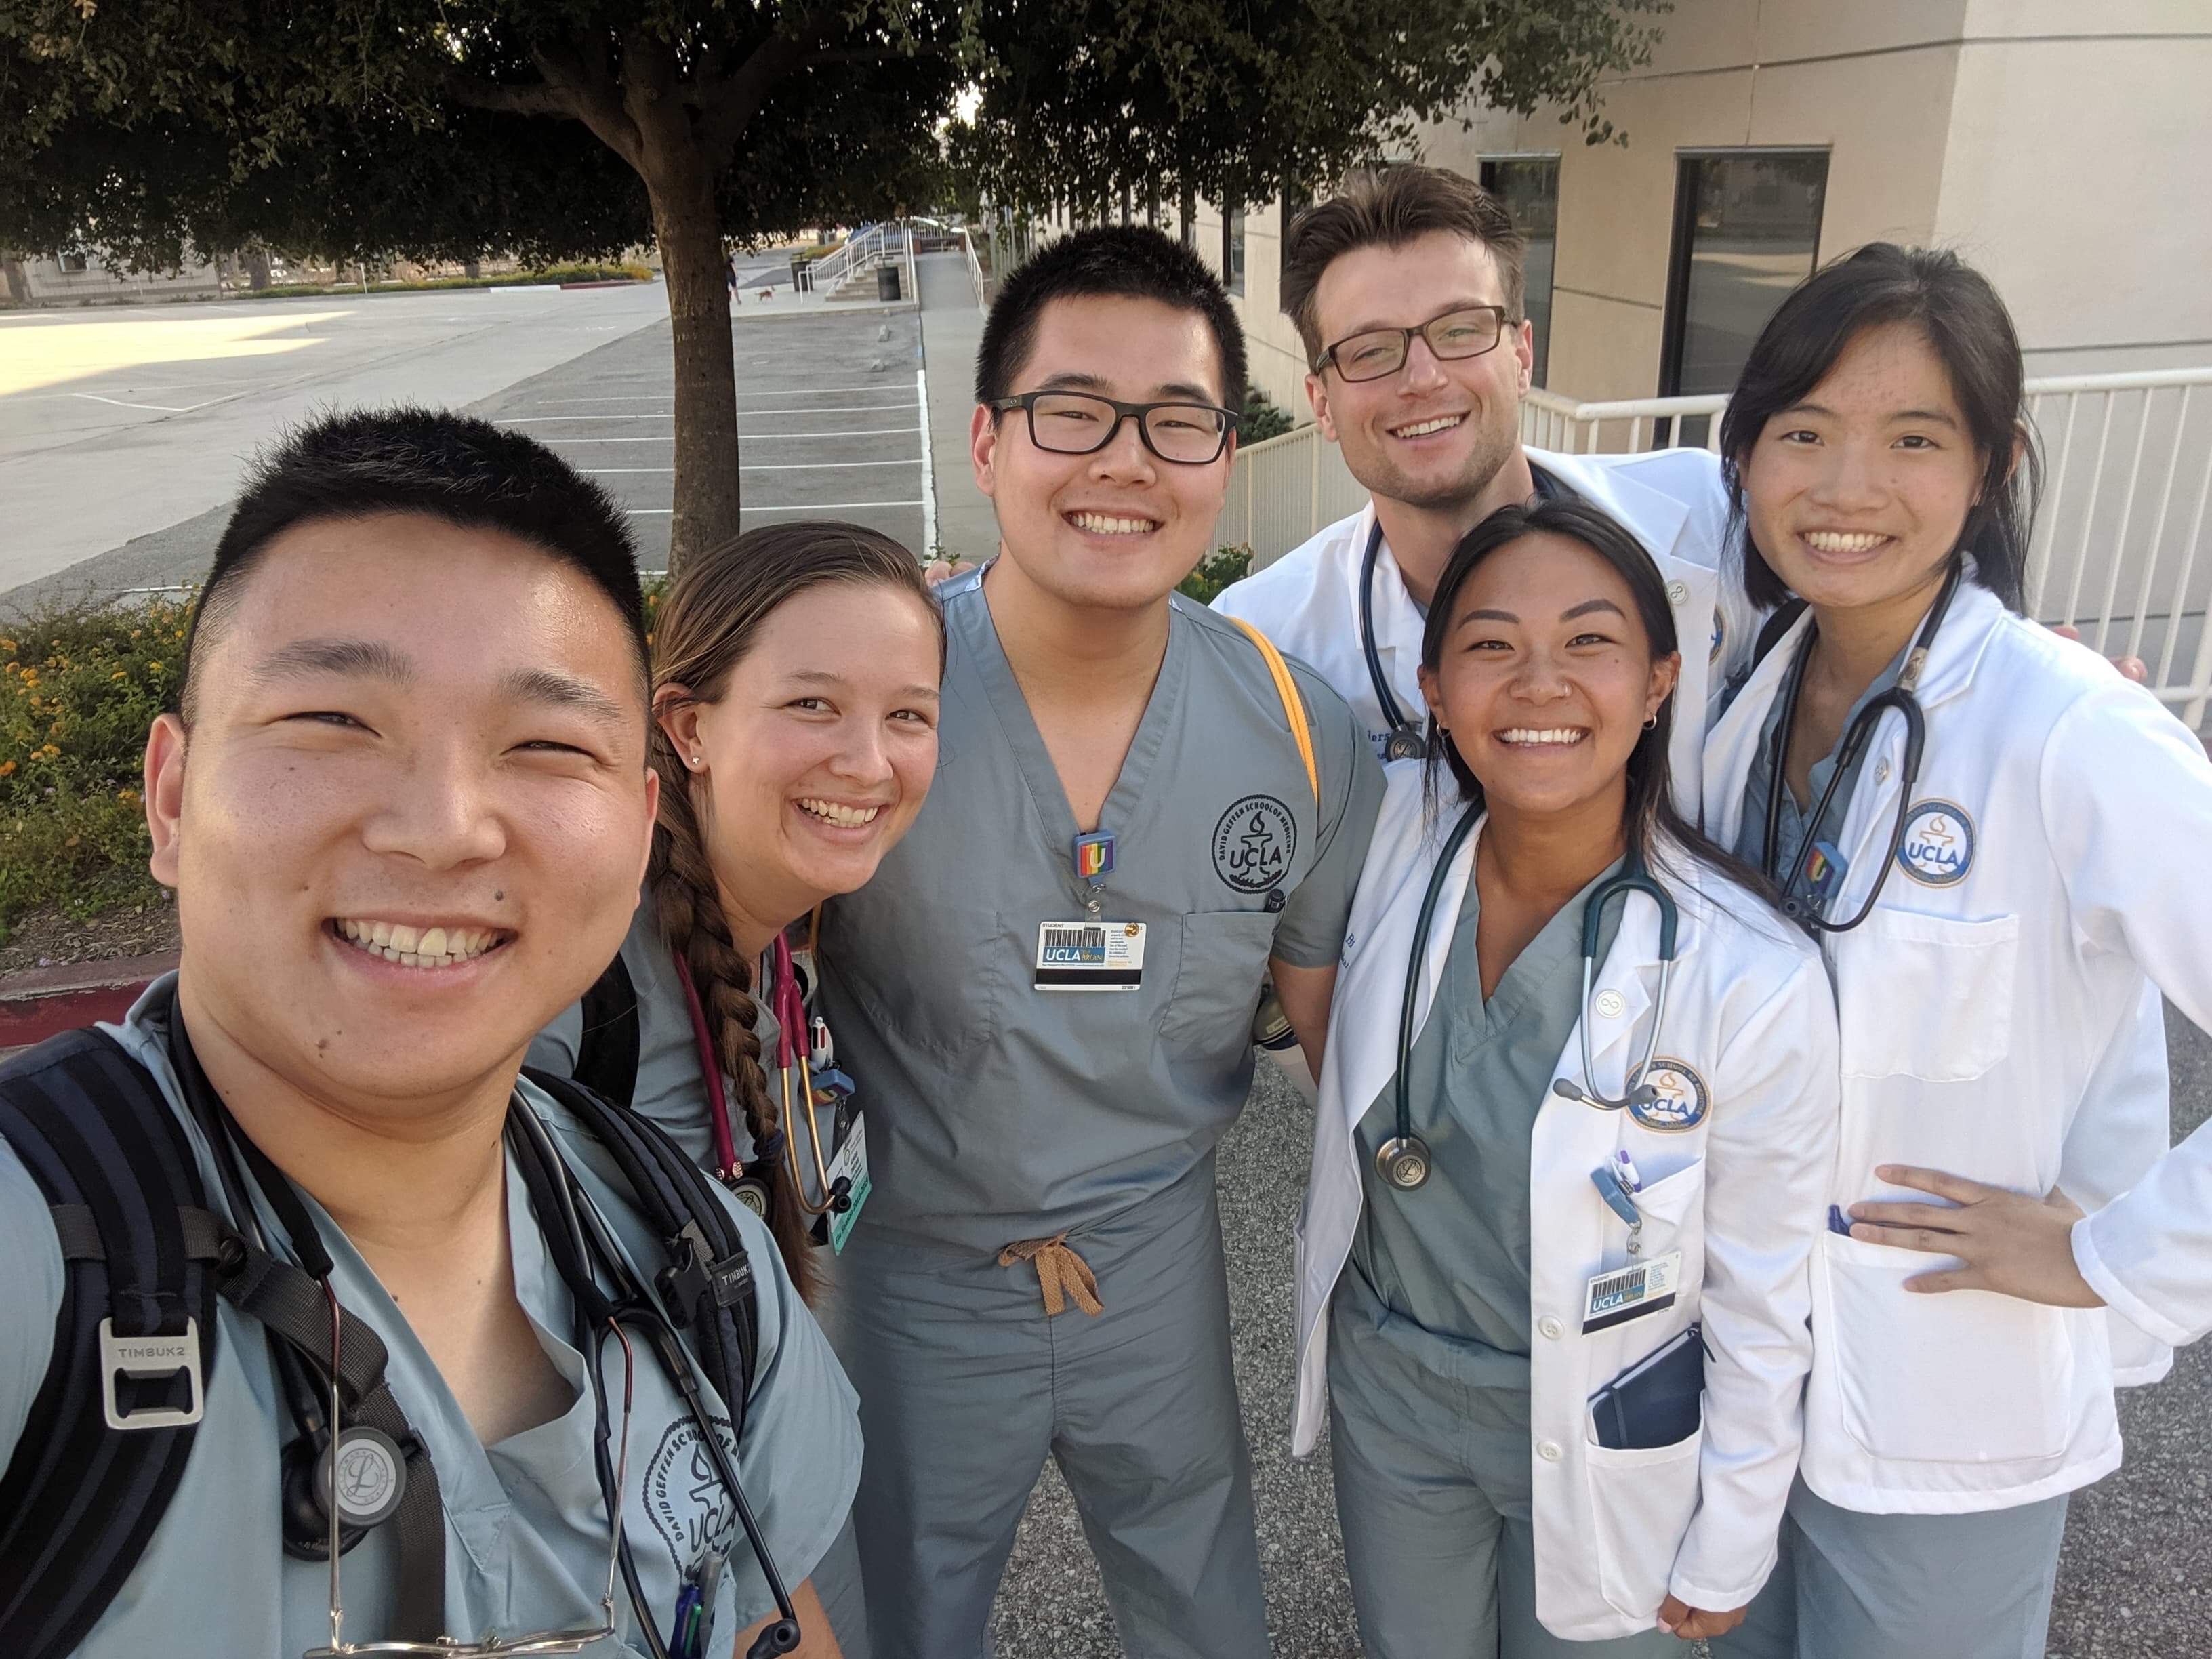 DGSOM medical students posing for group selfie